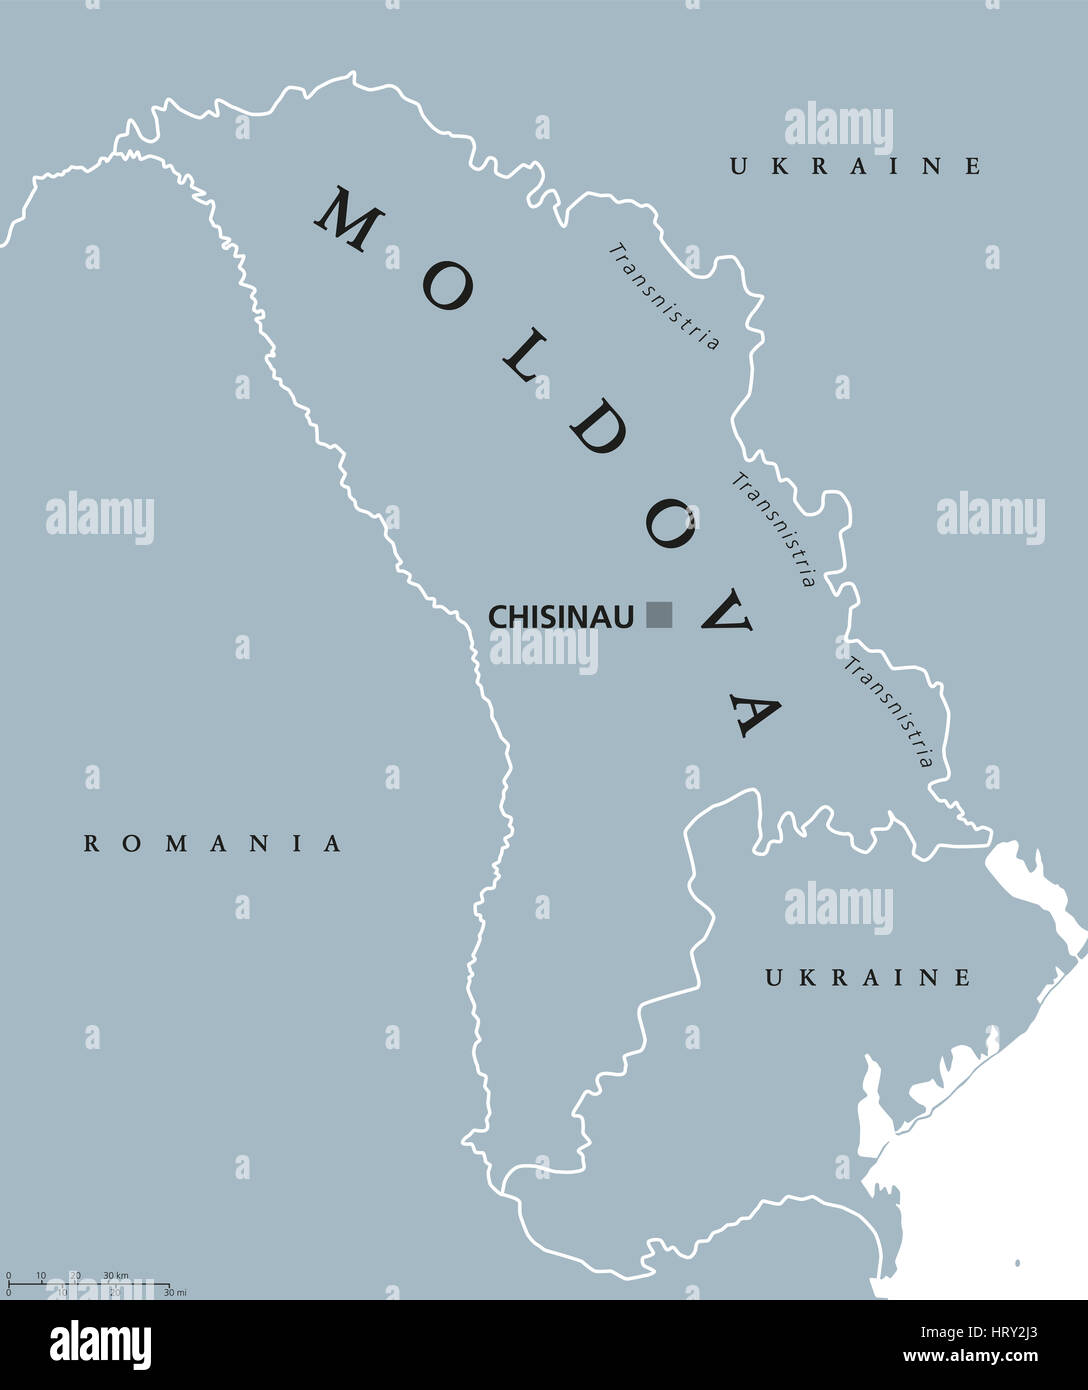 Moldova political map with capital Chisinau, Transnistria, national borders and neighbors. Also Moldavia, landlocked republic in Eastern Europe. Stock Photo